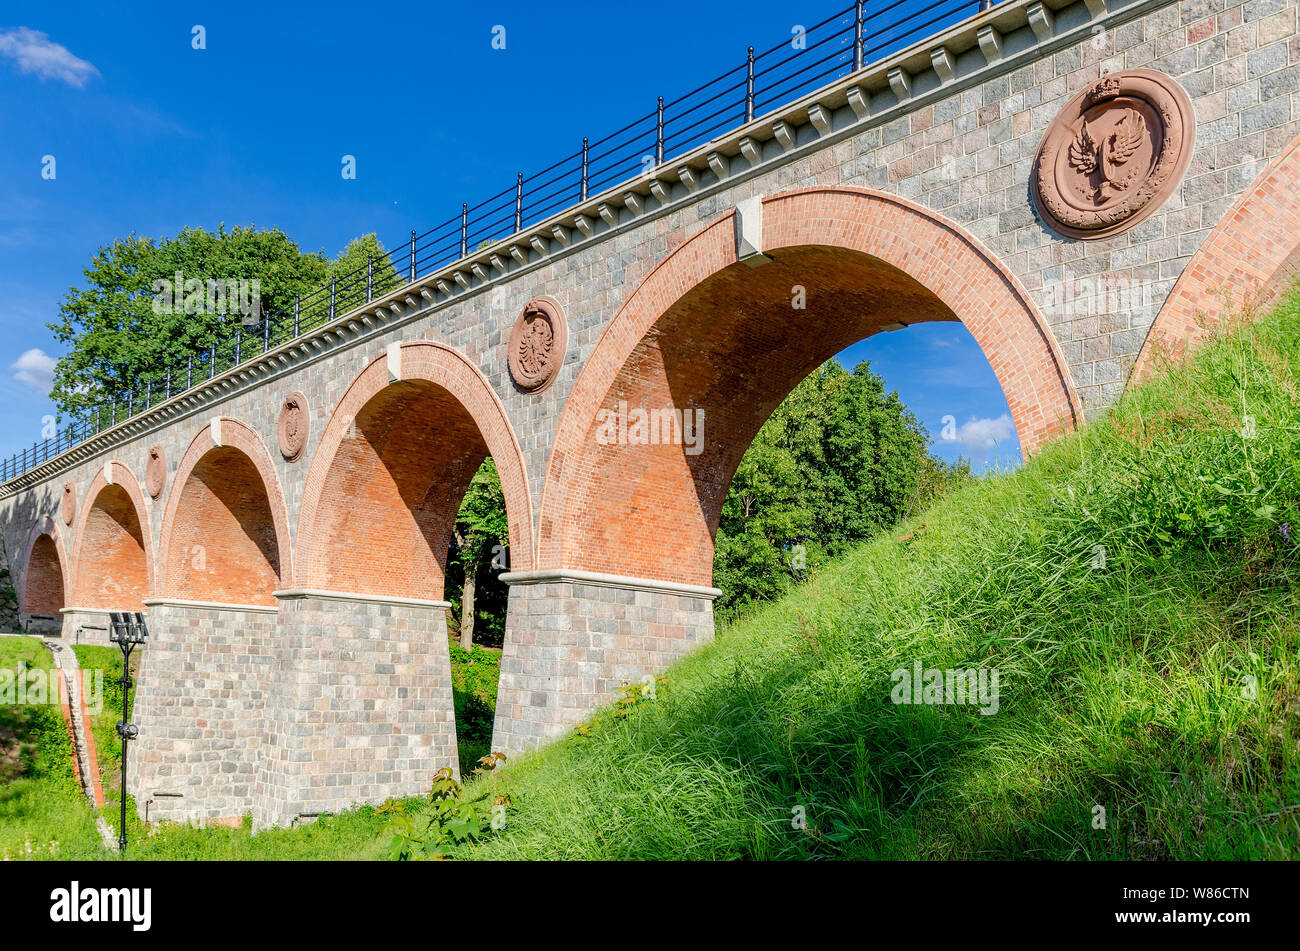 Bytow, pomeranian province, Poland, ger.: Butow. Historic 19th cent. railway bridge over the river of  Boruja. Stock Photo